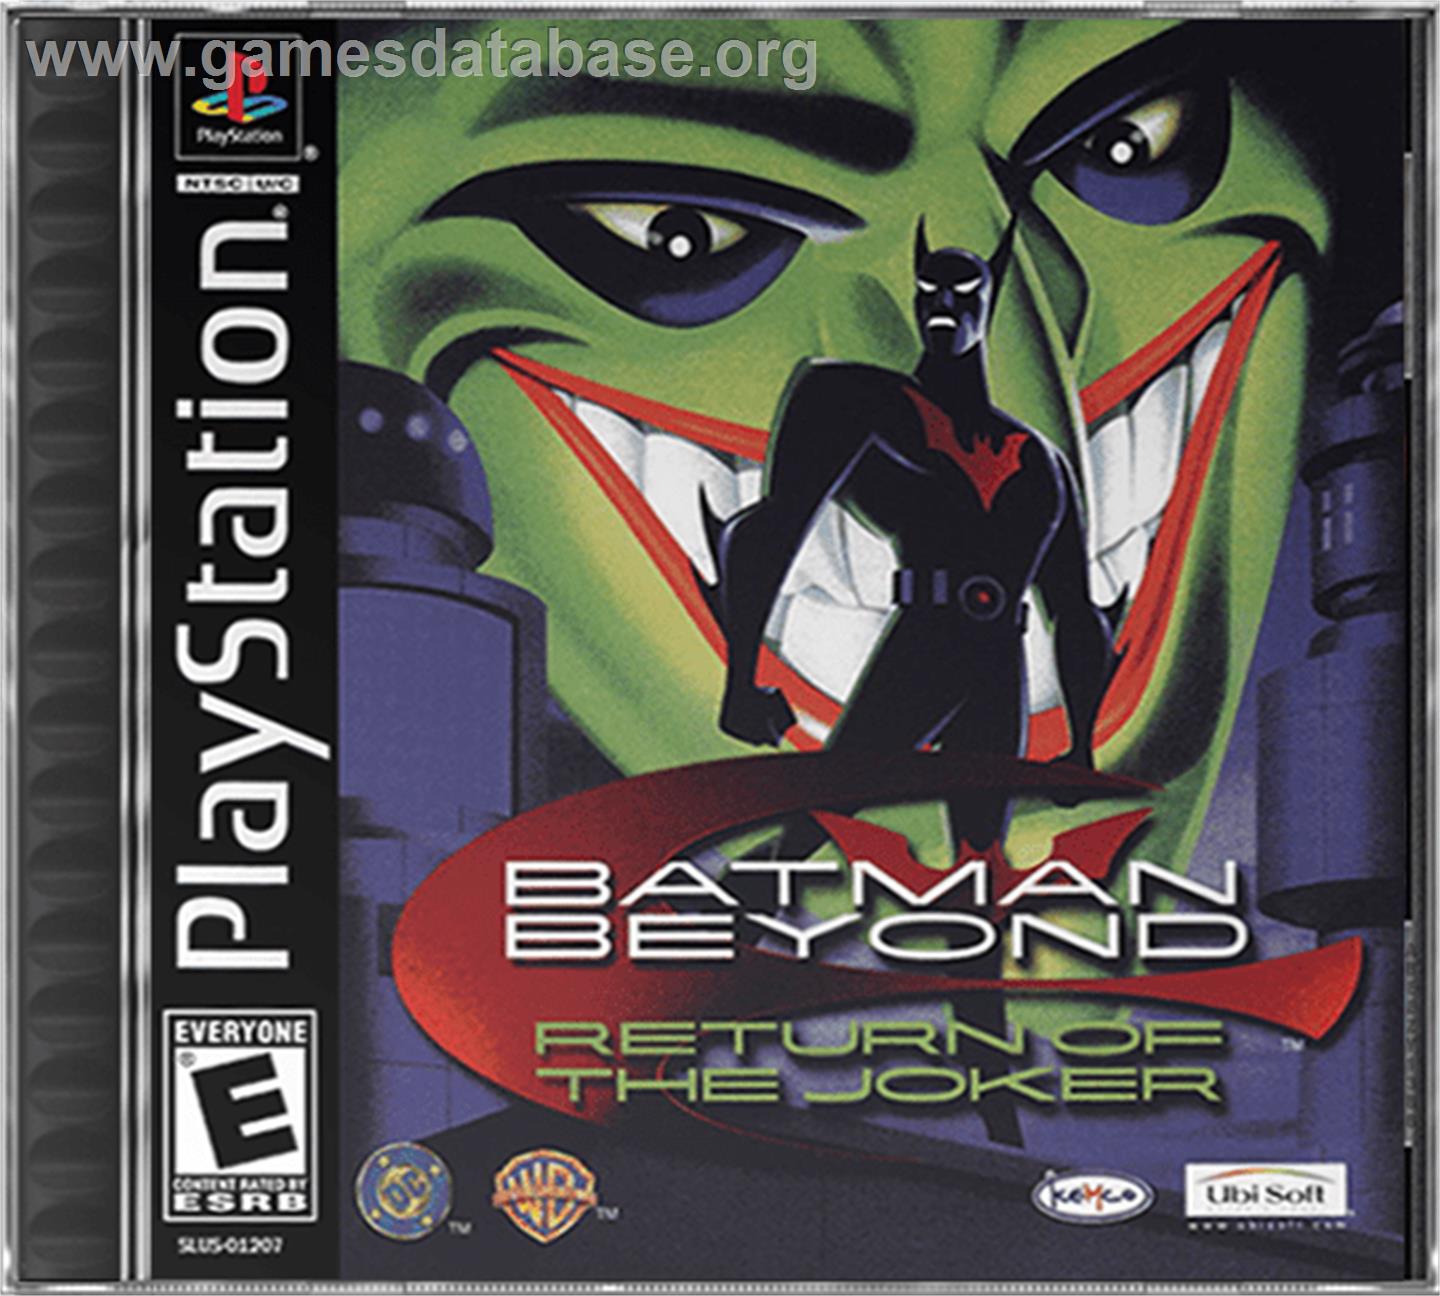 Batman Beyond: Return of the Joker - Sony Playstation - Artwork - Box